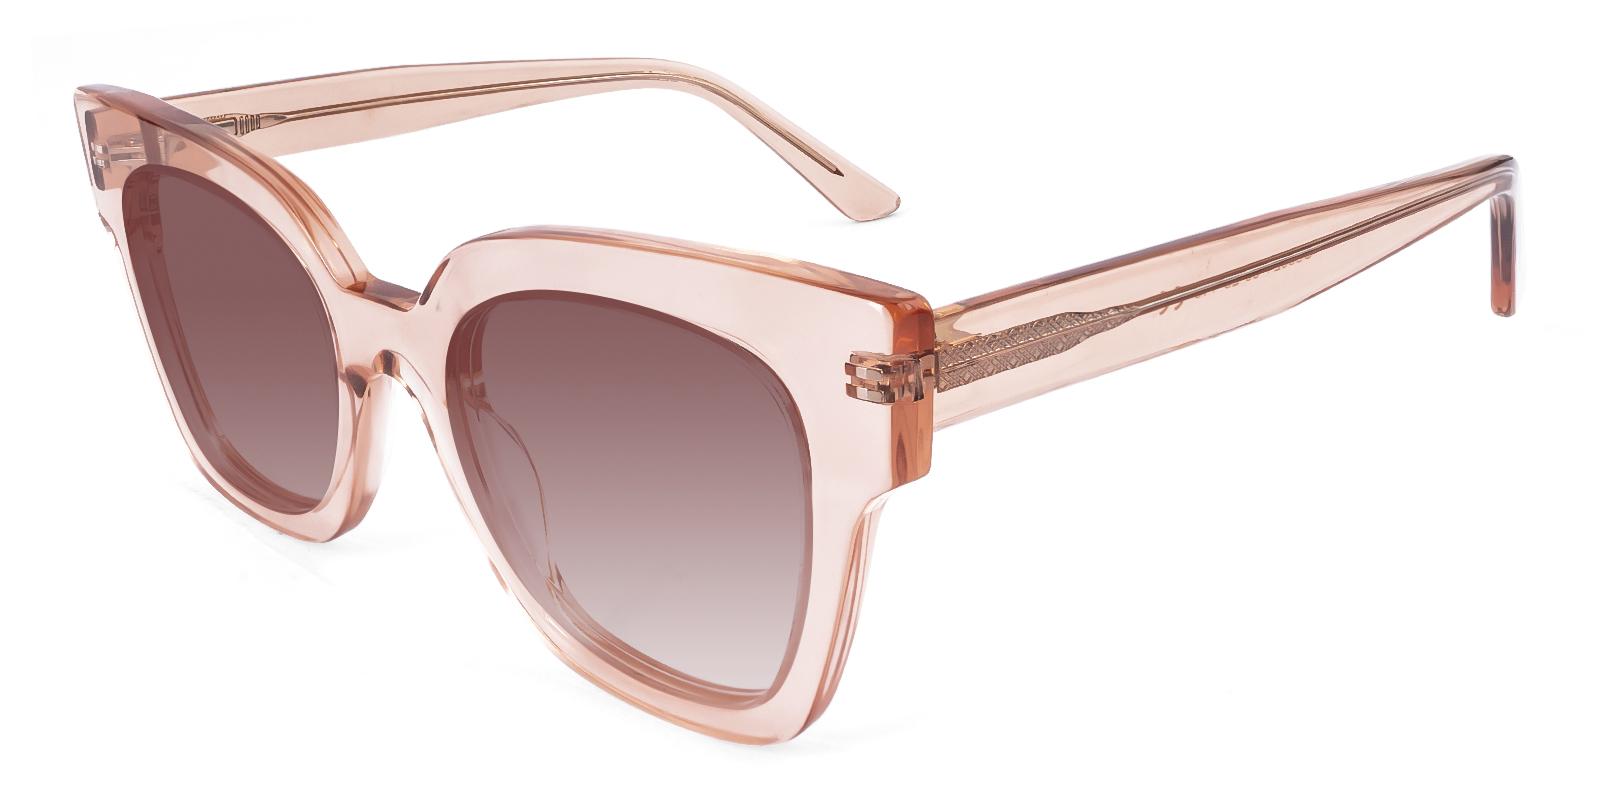 Taxity Orange Acetate Sunglasses , UniversalBridgeFit Frames from ABBE Glasses